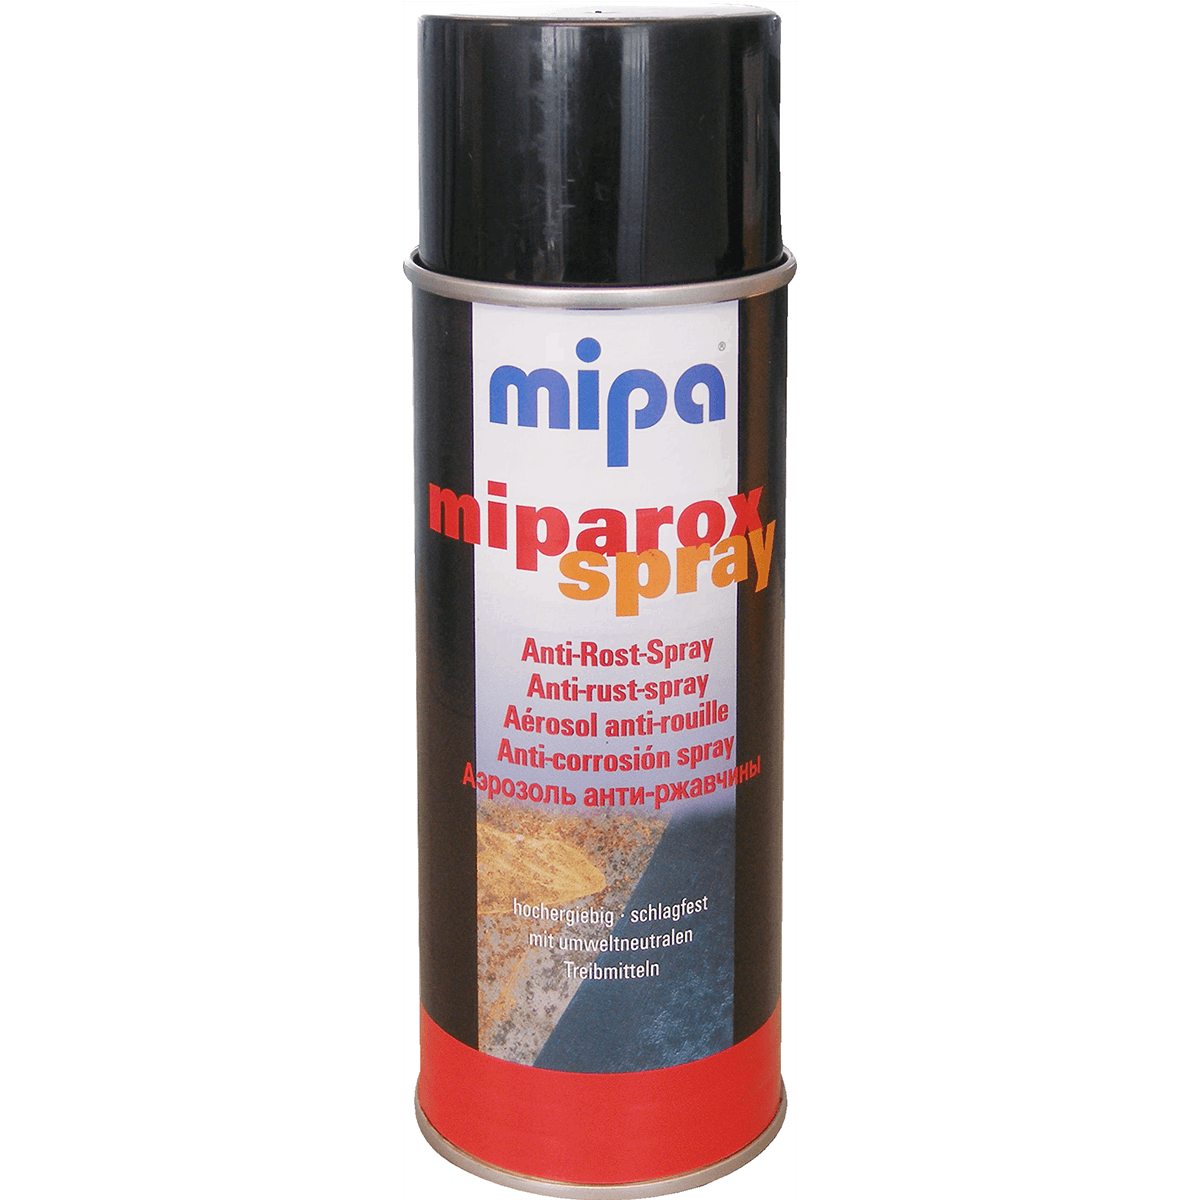 Mipa miparox Anti-Rost Spray von Mipa